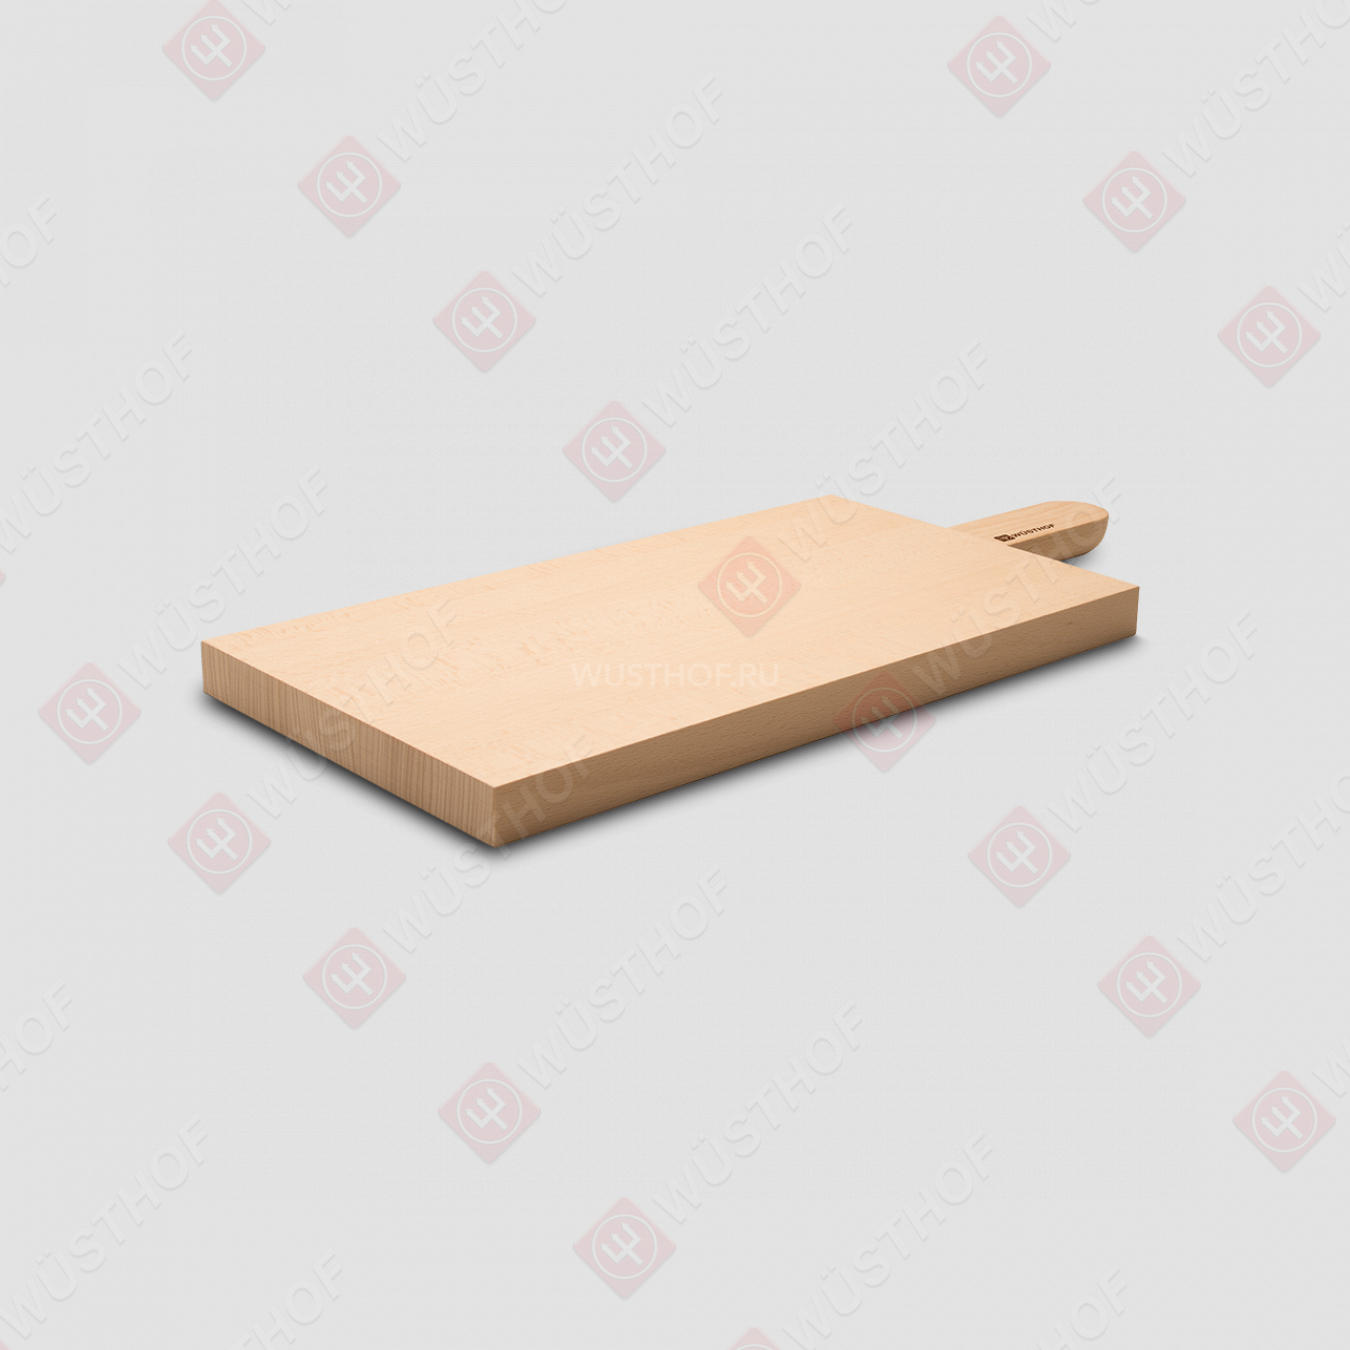 Доска разделочная деревянная 38х21х2.5 см, серия Cutting boards, WUESTHOF, Германия